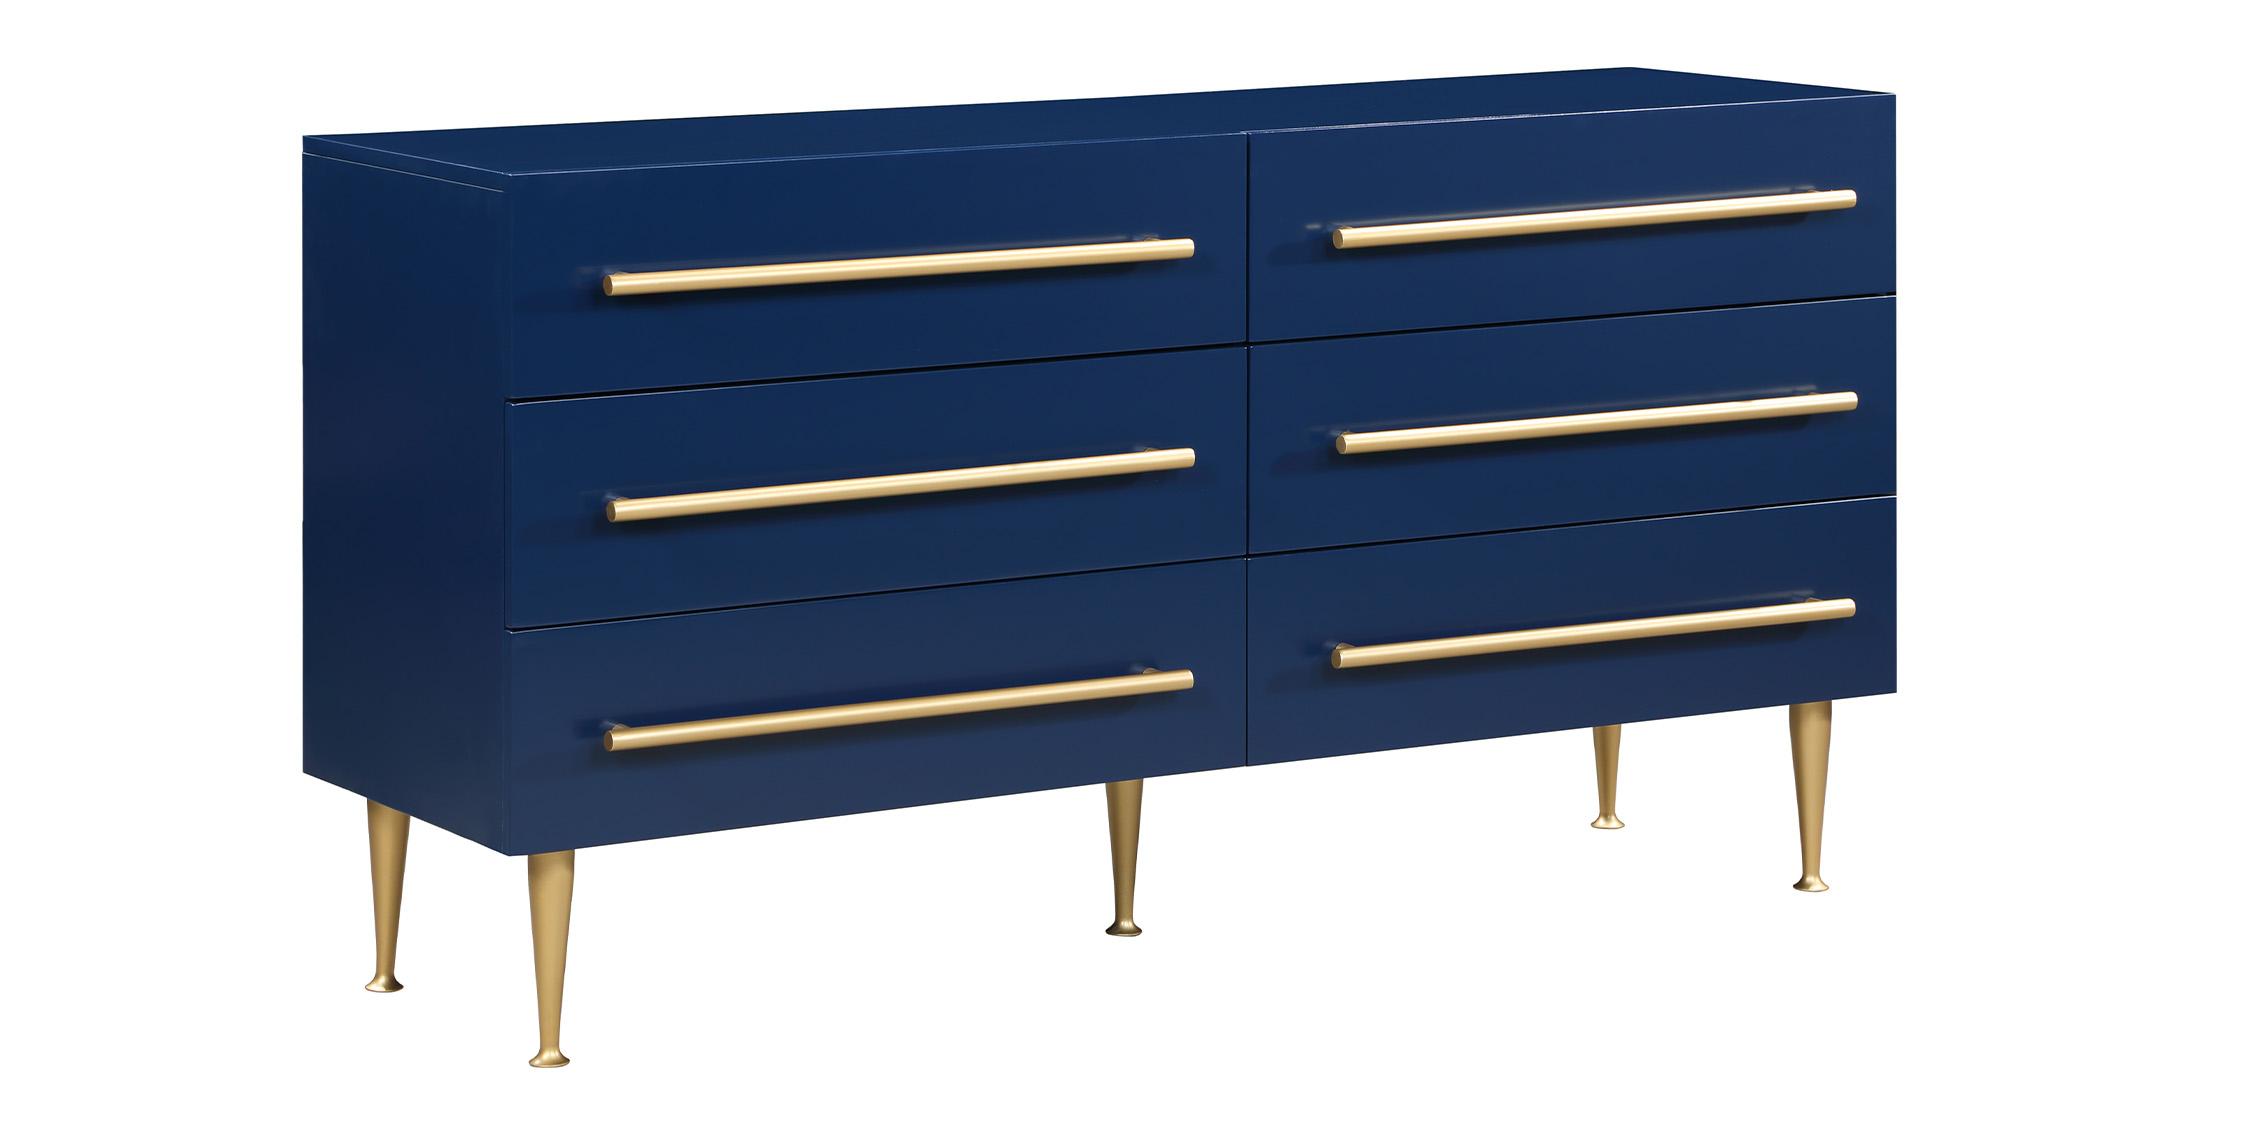 Contemporary, Modern Dresser MARISOL 844Navy-D 844Navy-D in Navy, Gold 